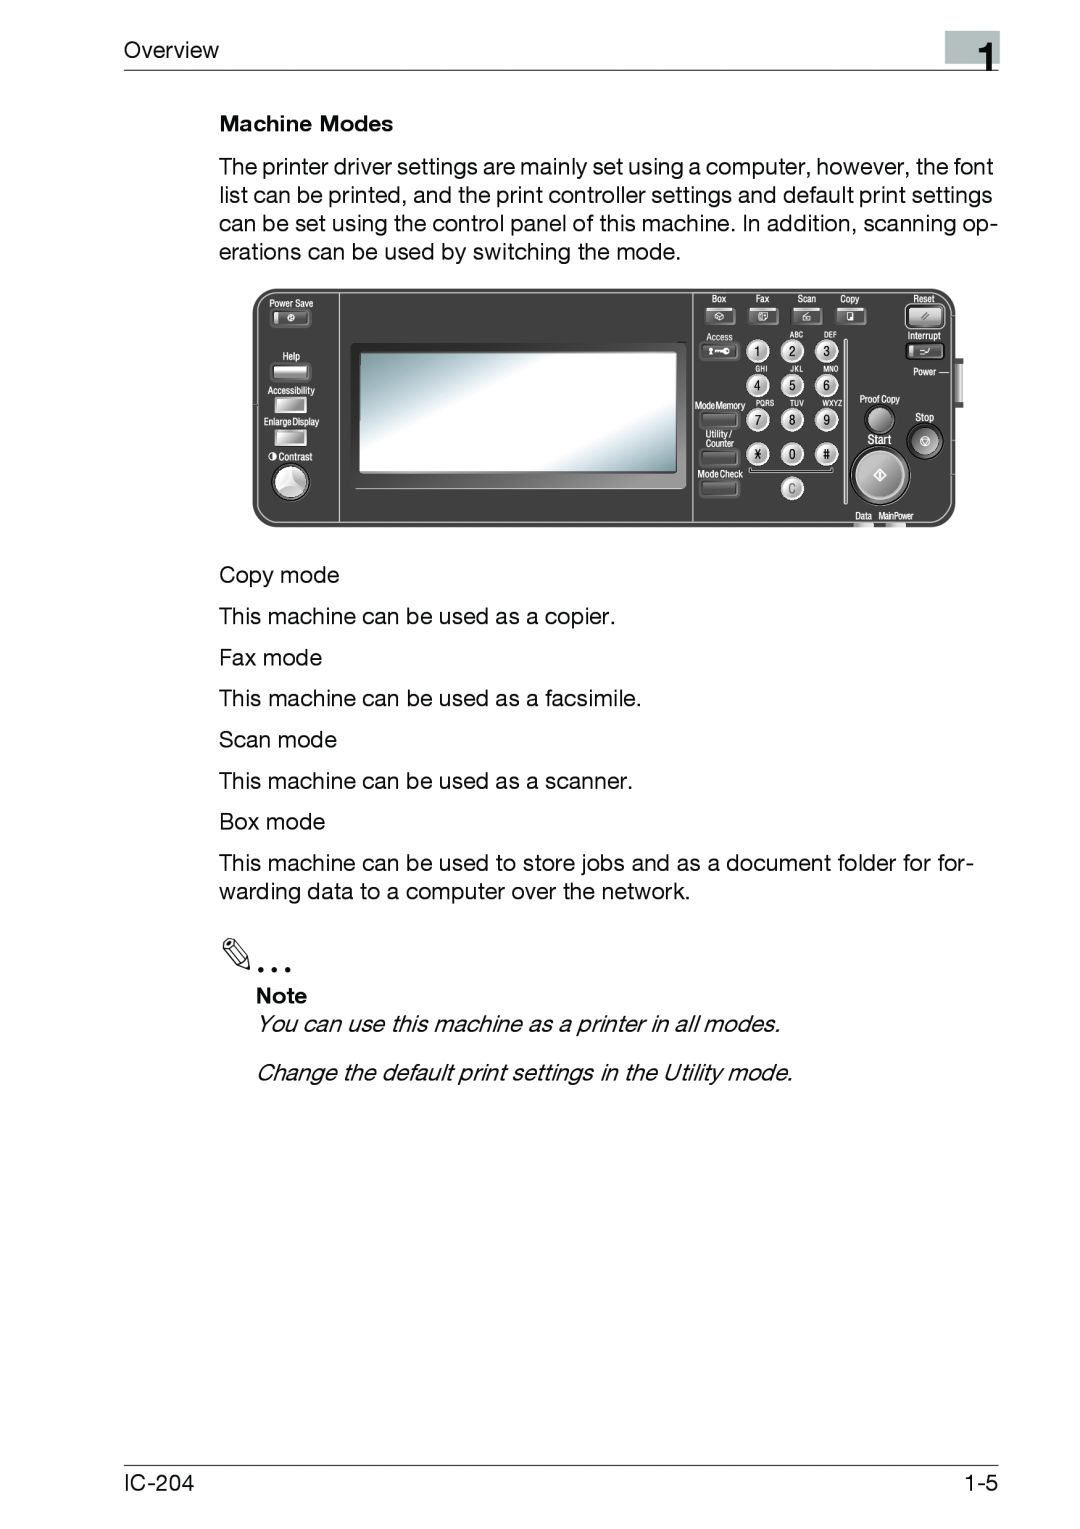 Konica Minolta IC-204 manual Overview, Machine Modes 